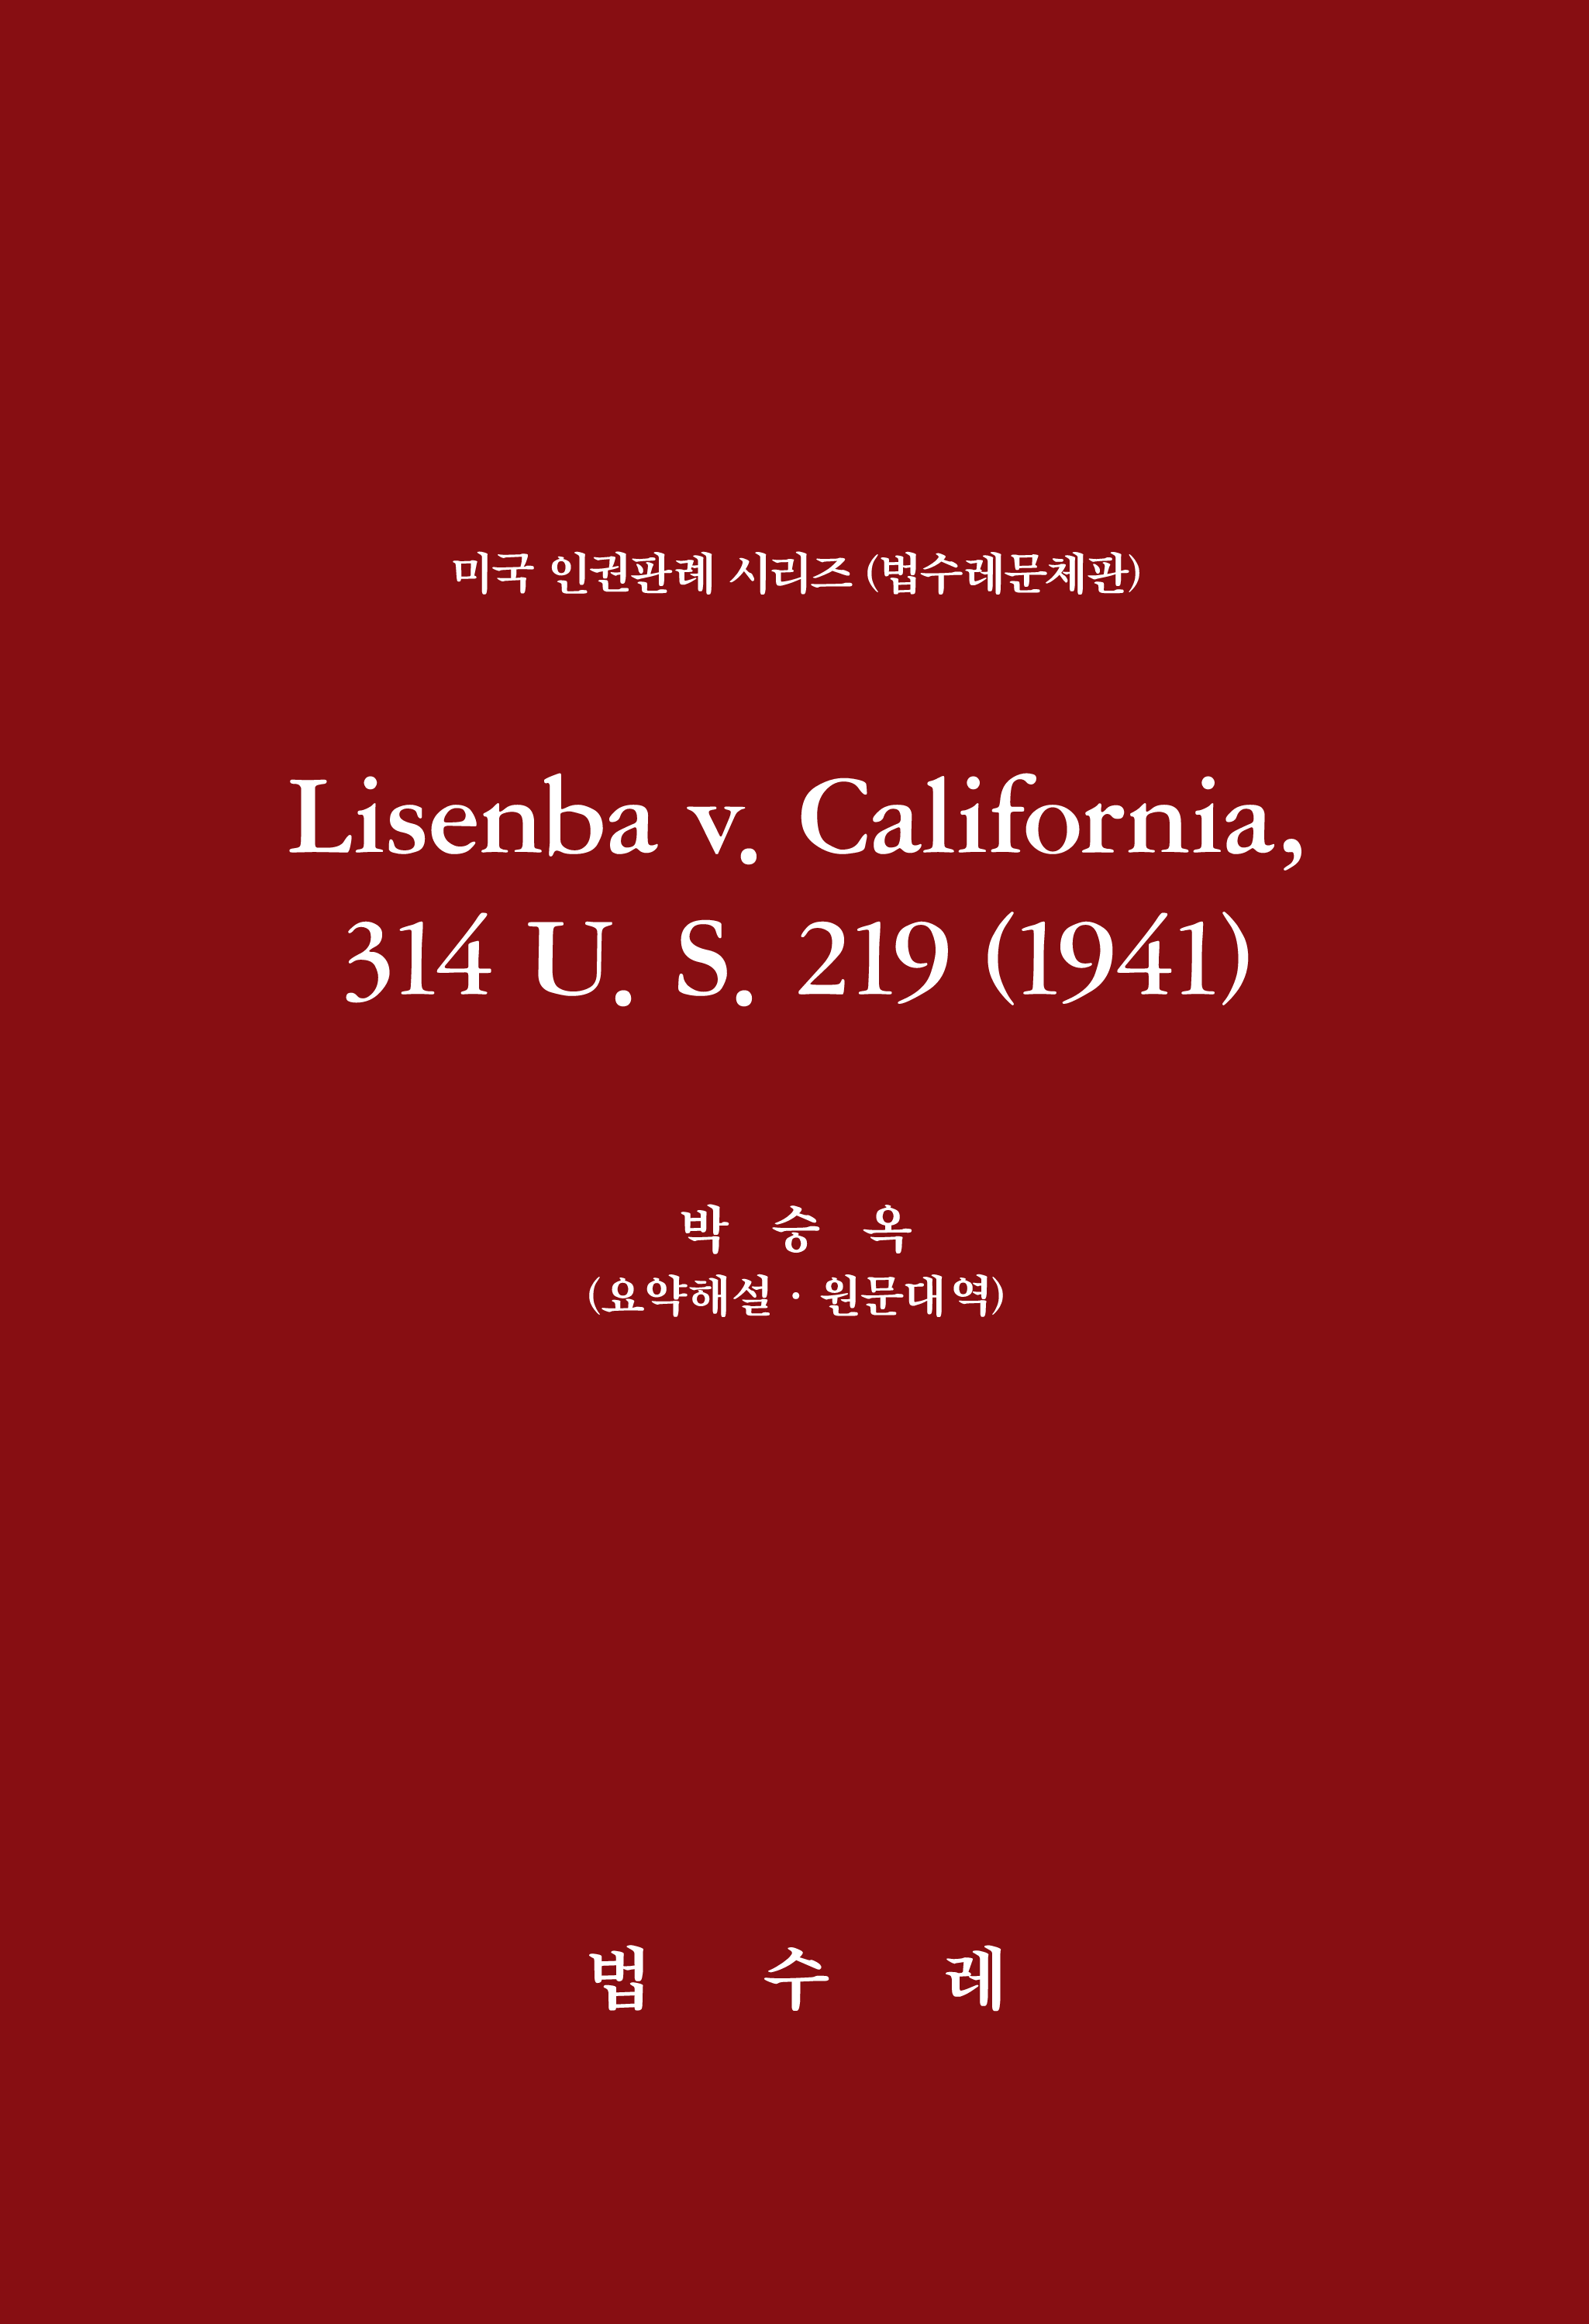 Lisenba v. California, 314 U. S. 219 (1941)